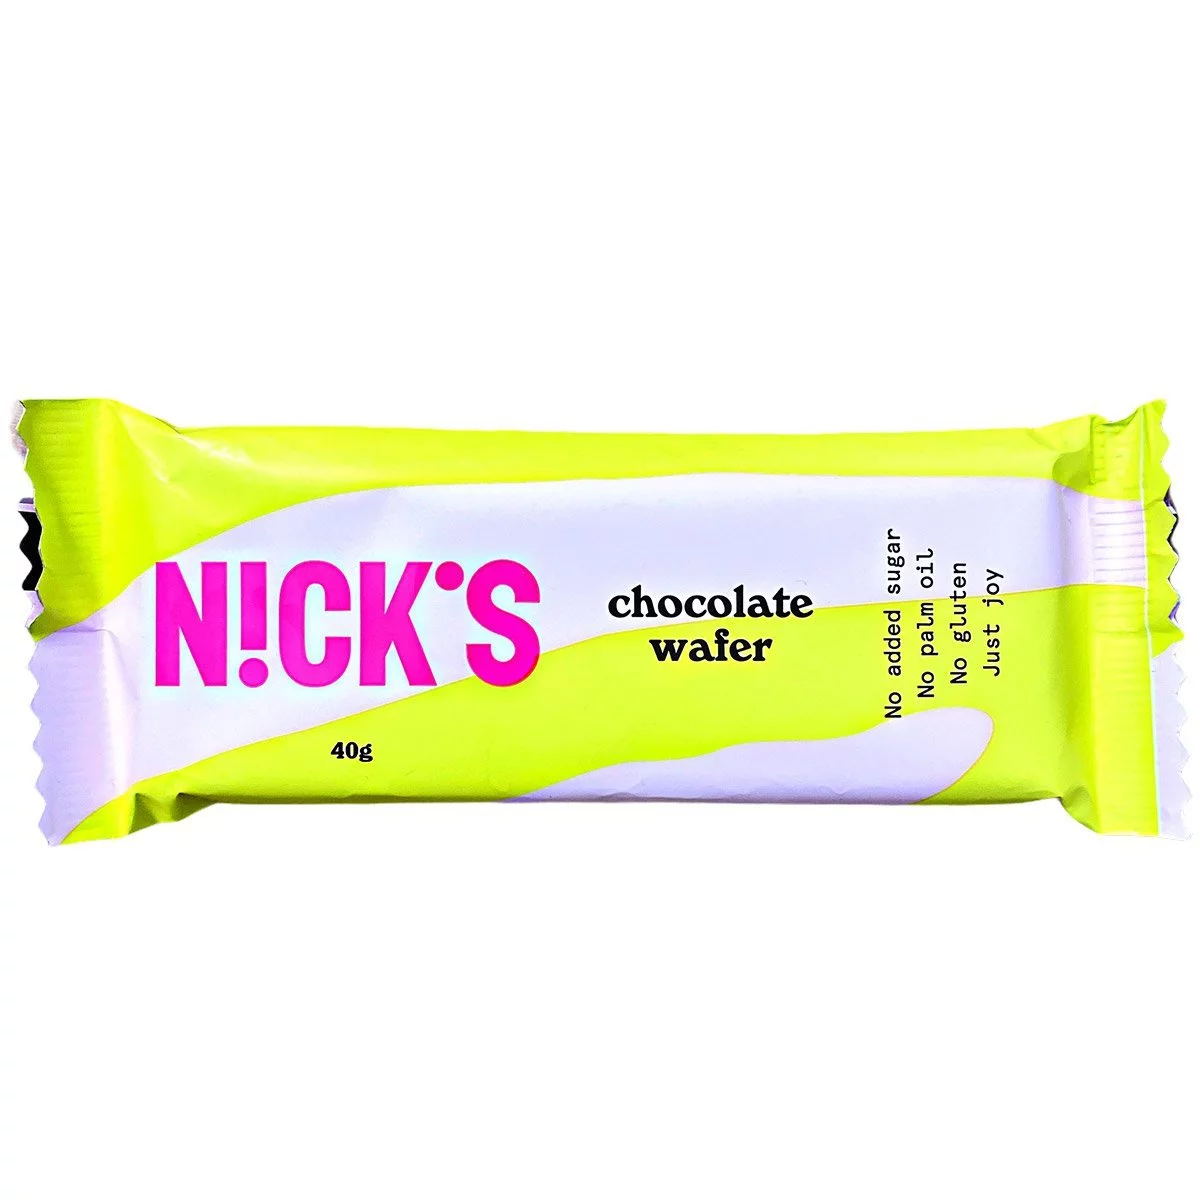 NICK'S chocolate wafer (kexbar) (40g) 1